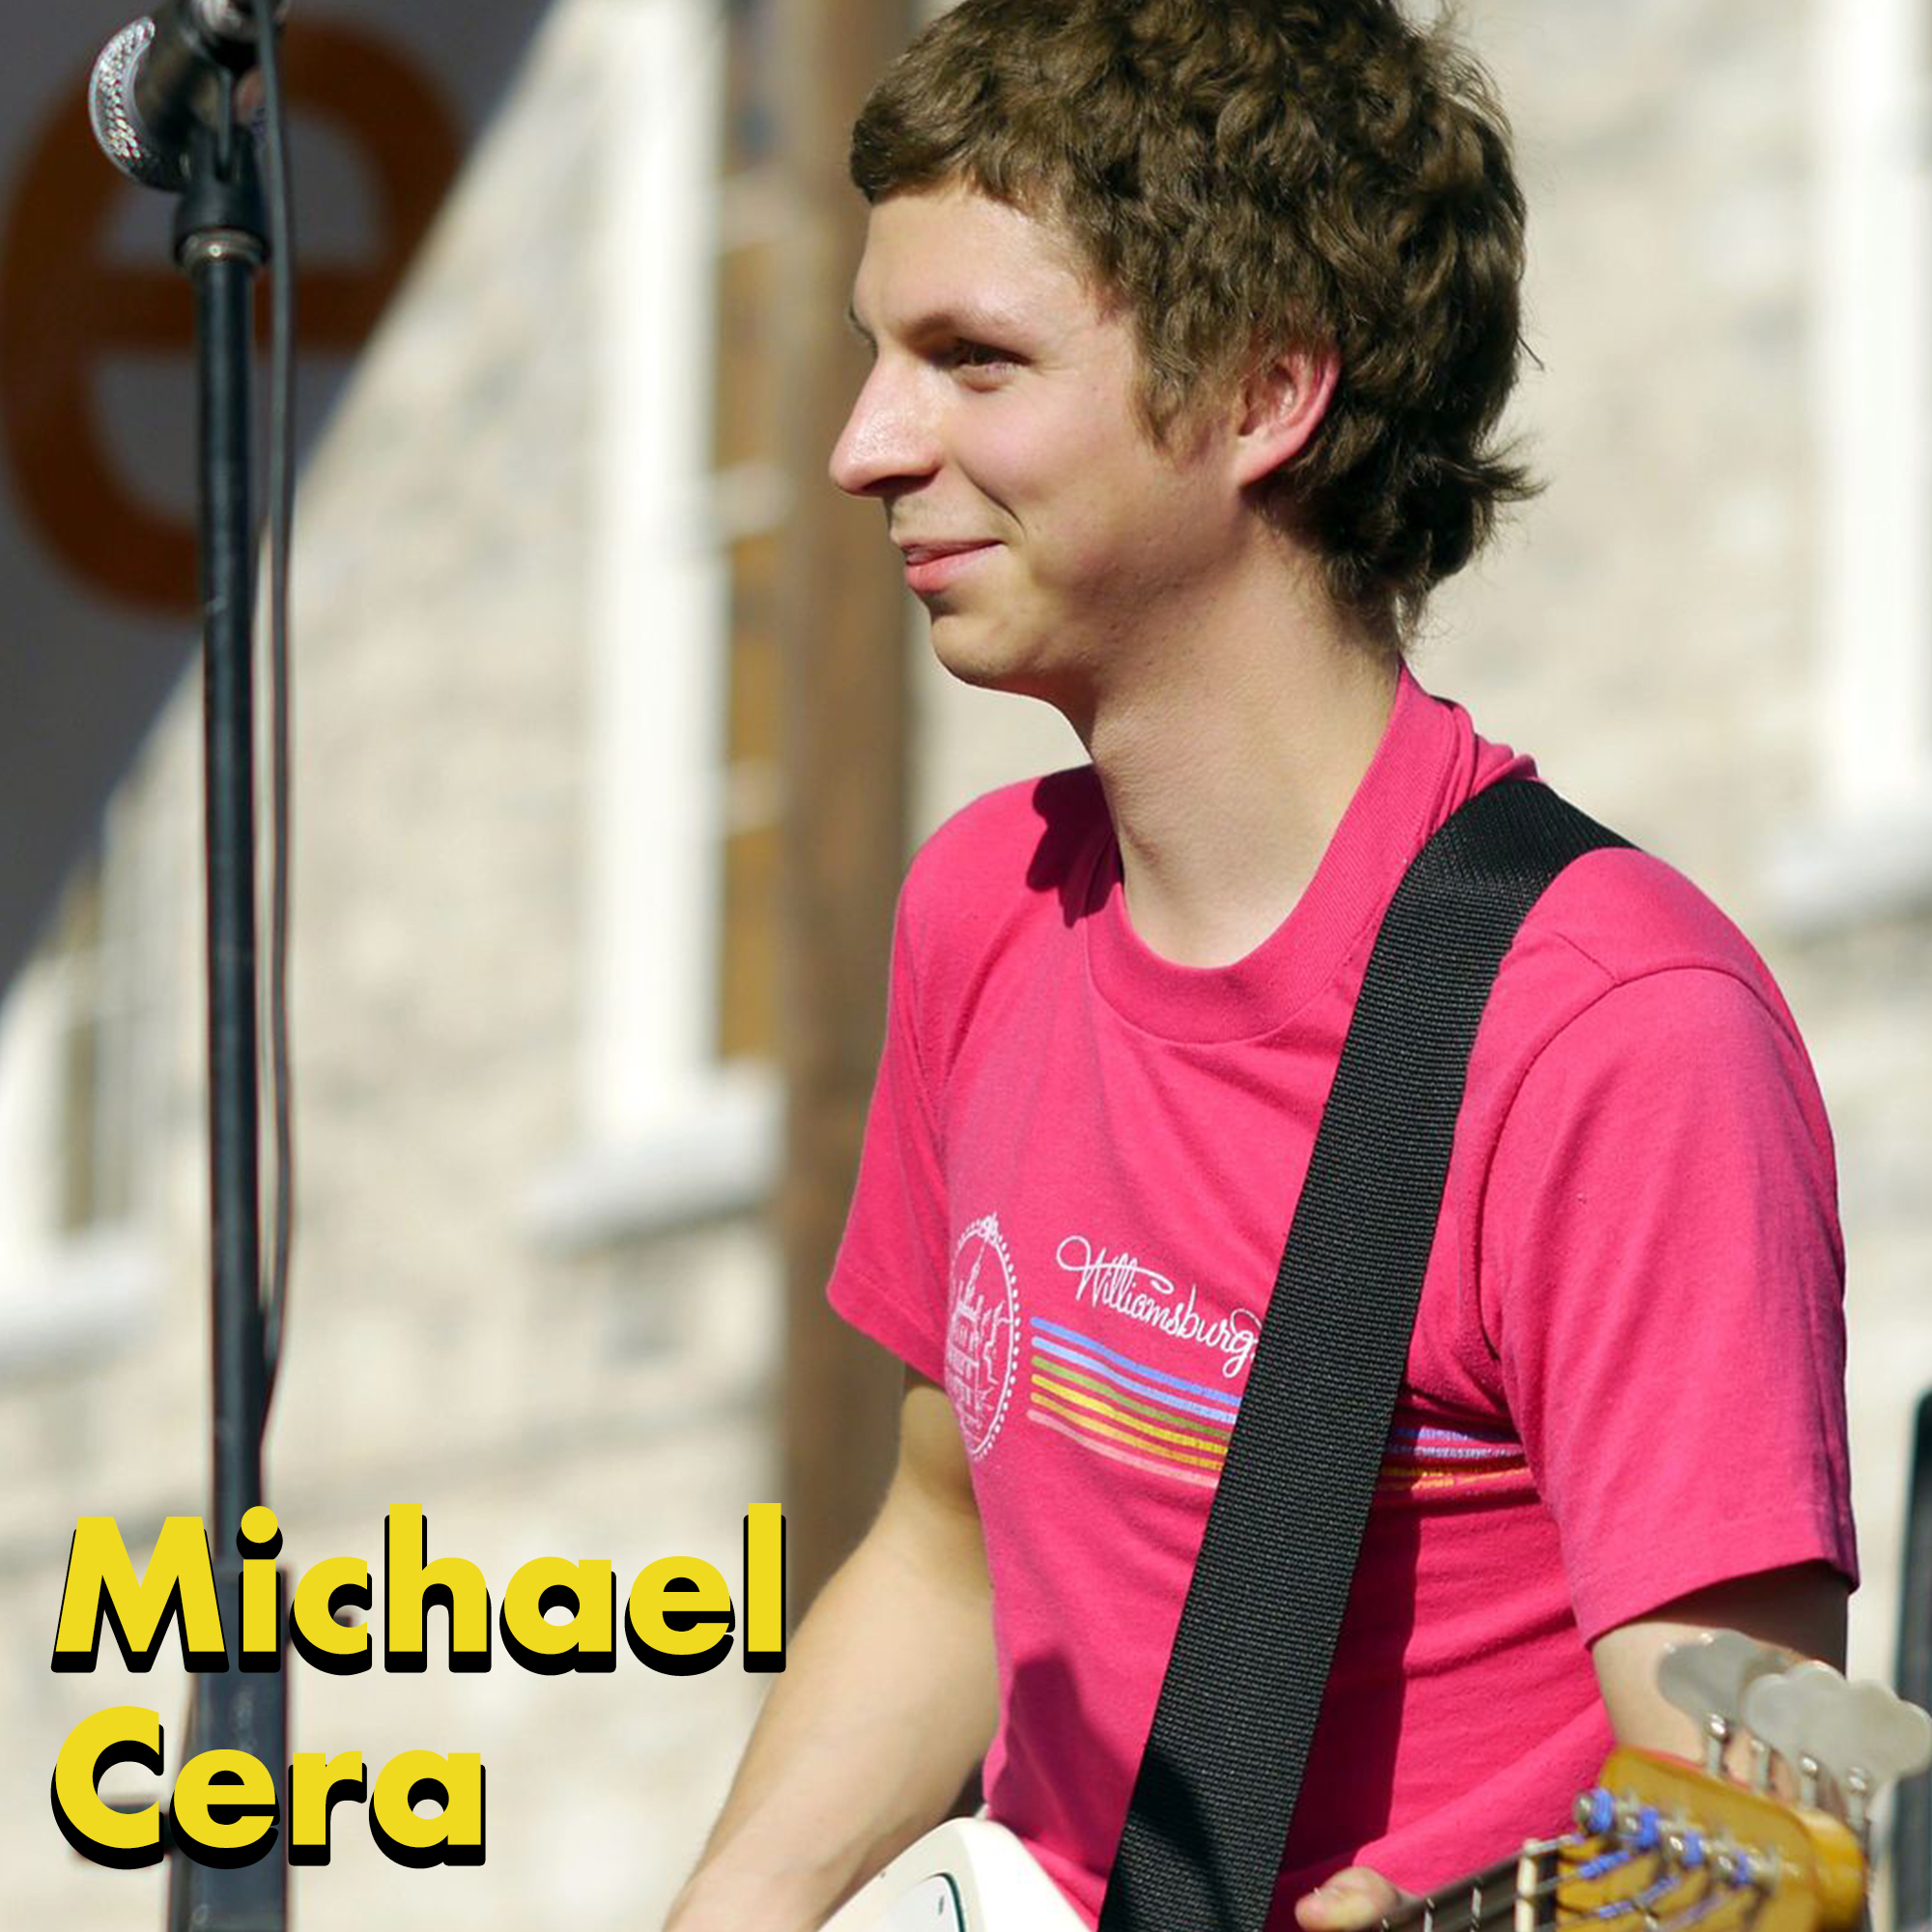 actors in bands - michael cera profile